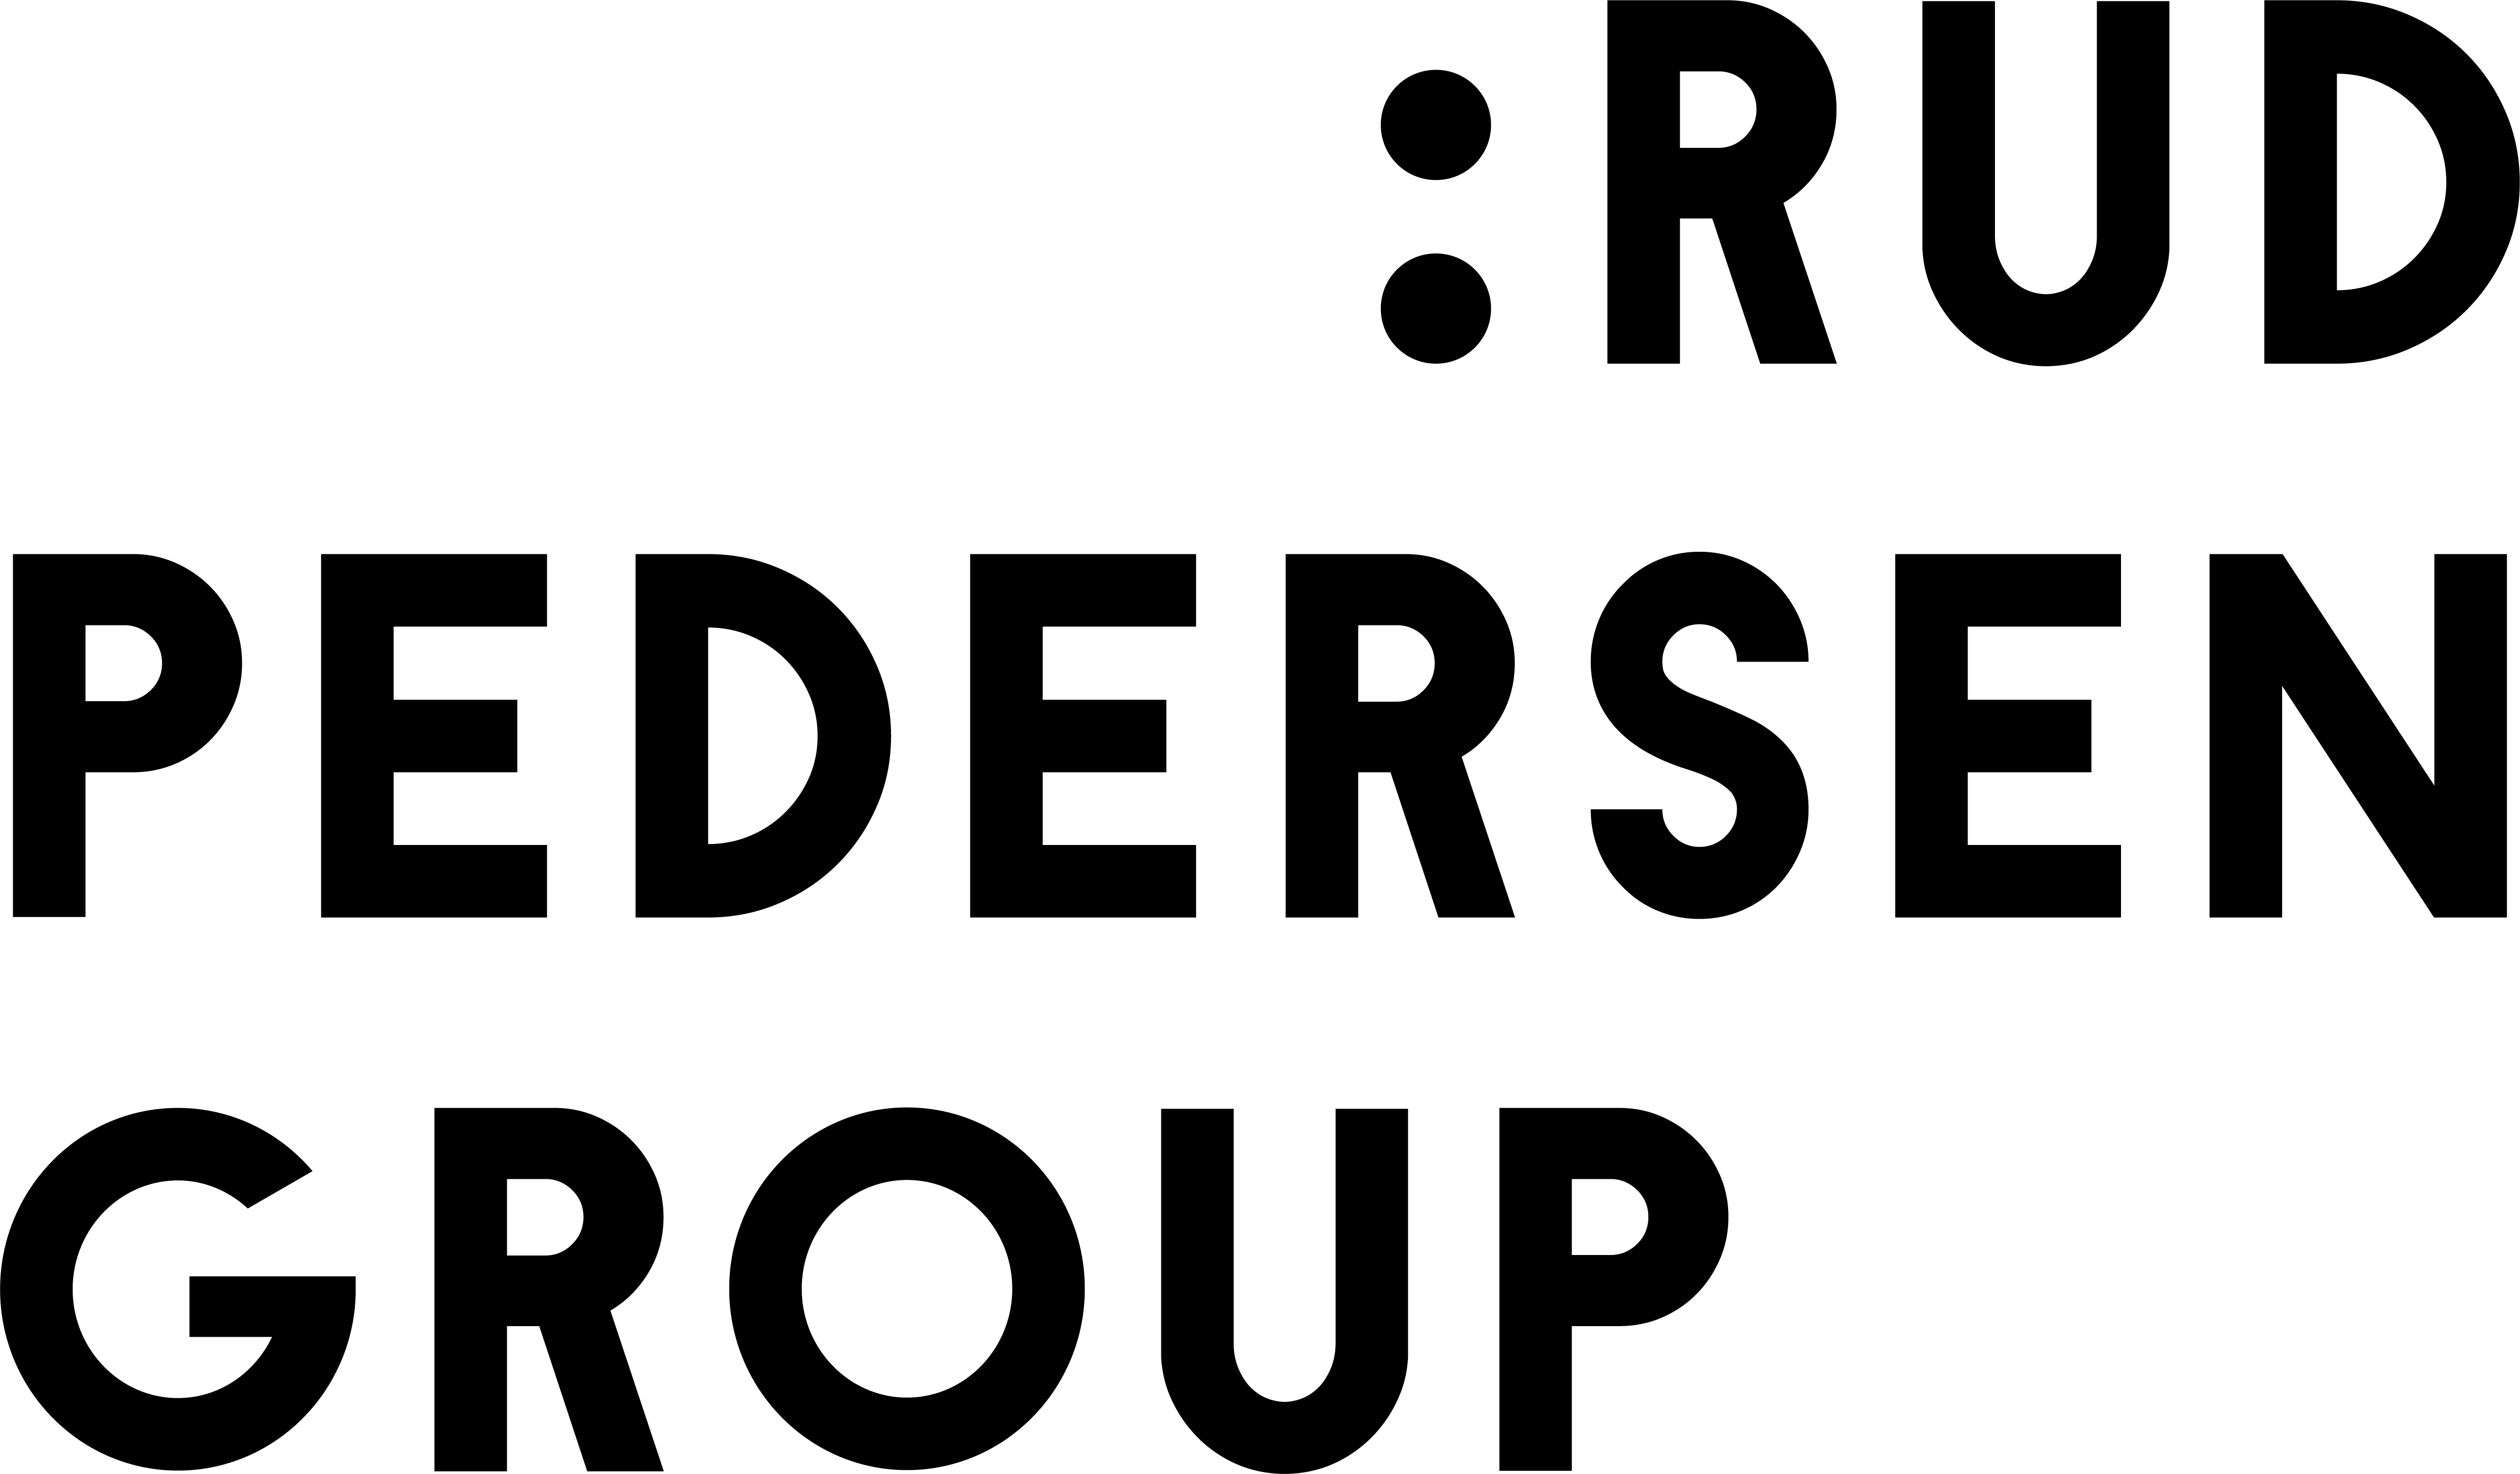 Rud_Pedersen_Group_Logo_Black